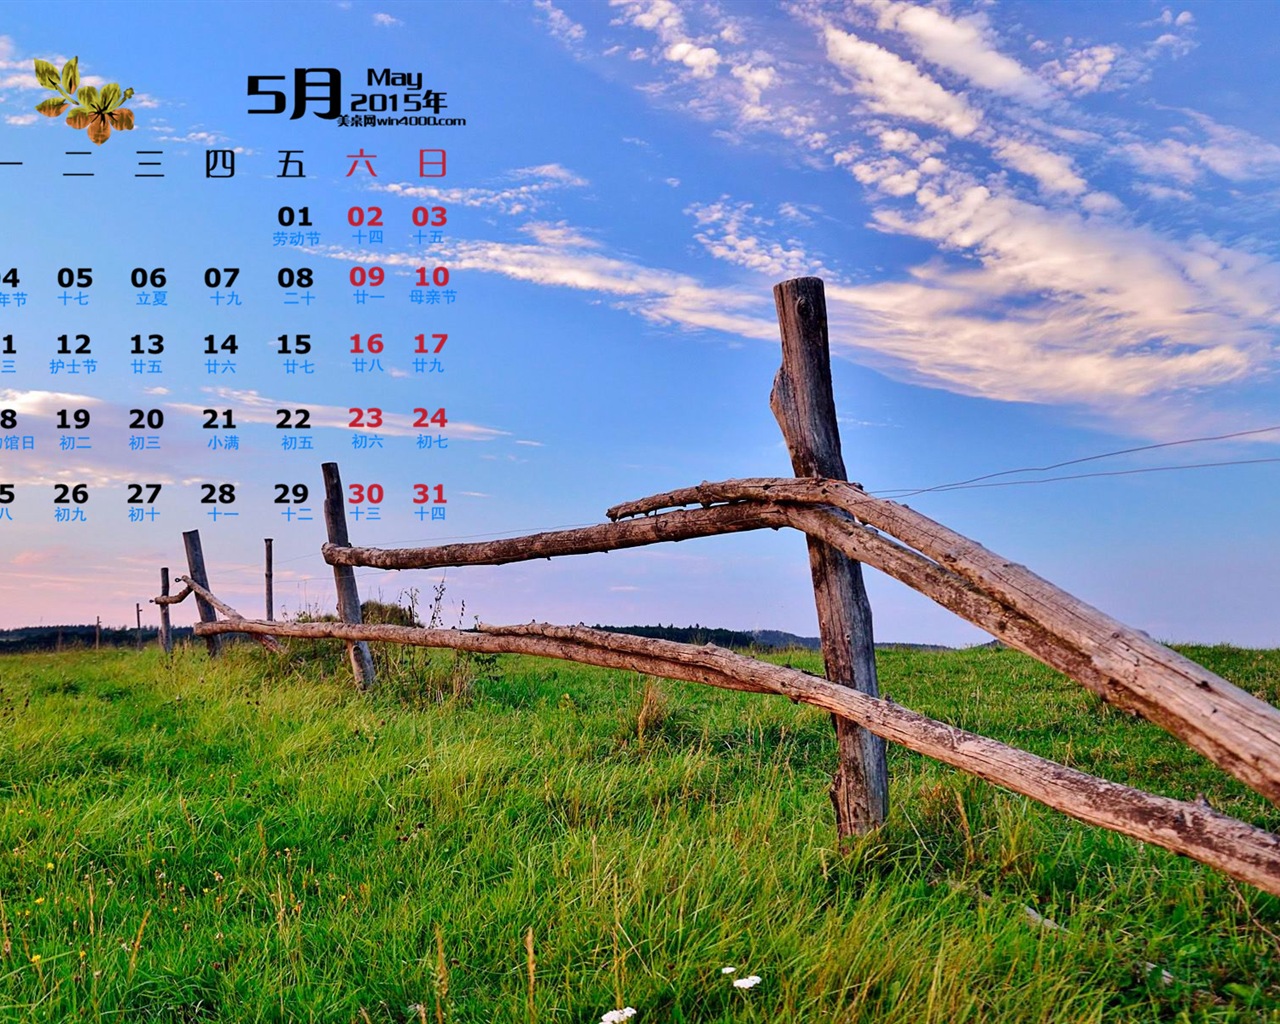 Mai 2015 calendar fond d'écran (1) #9 - 1280x1024